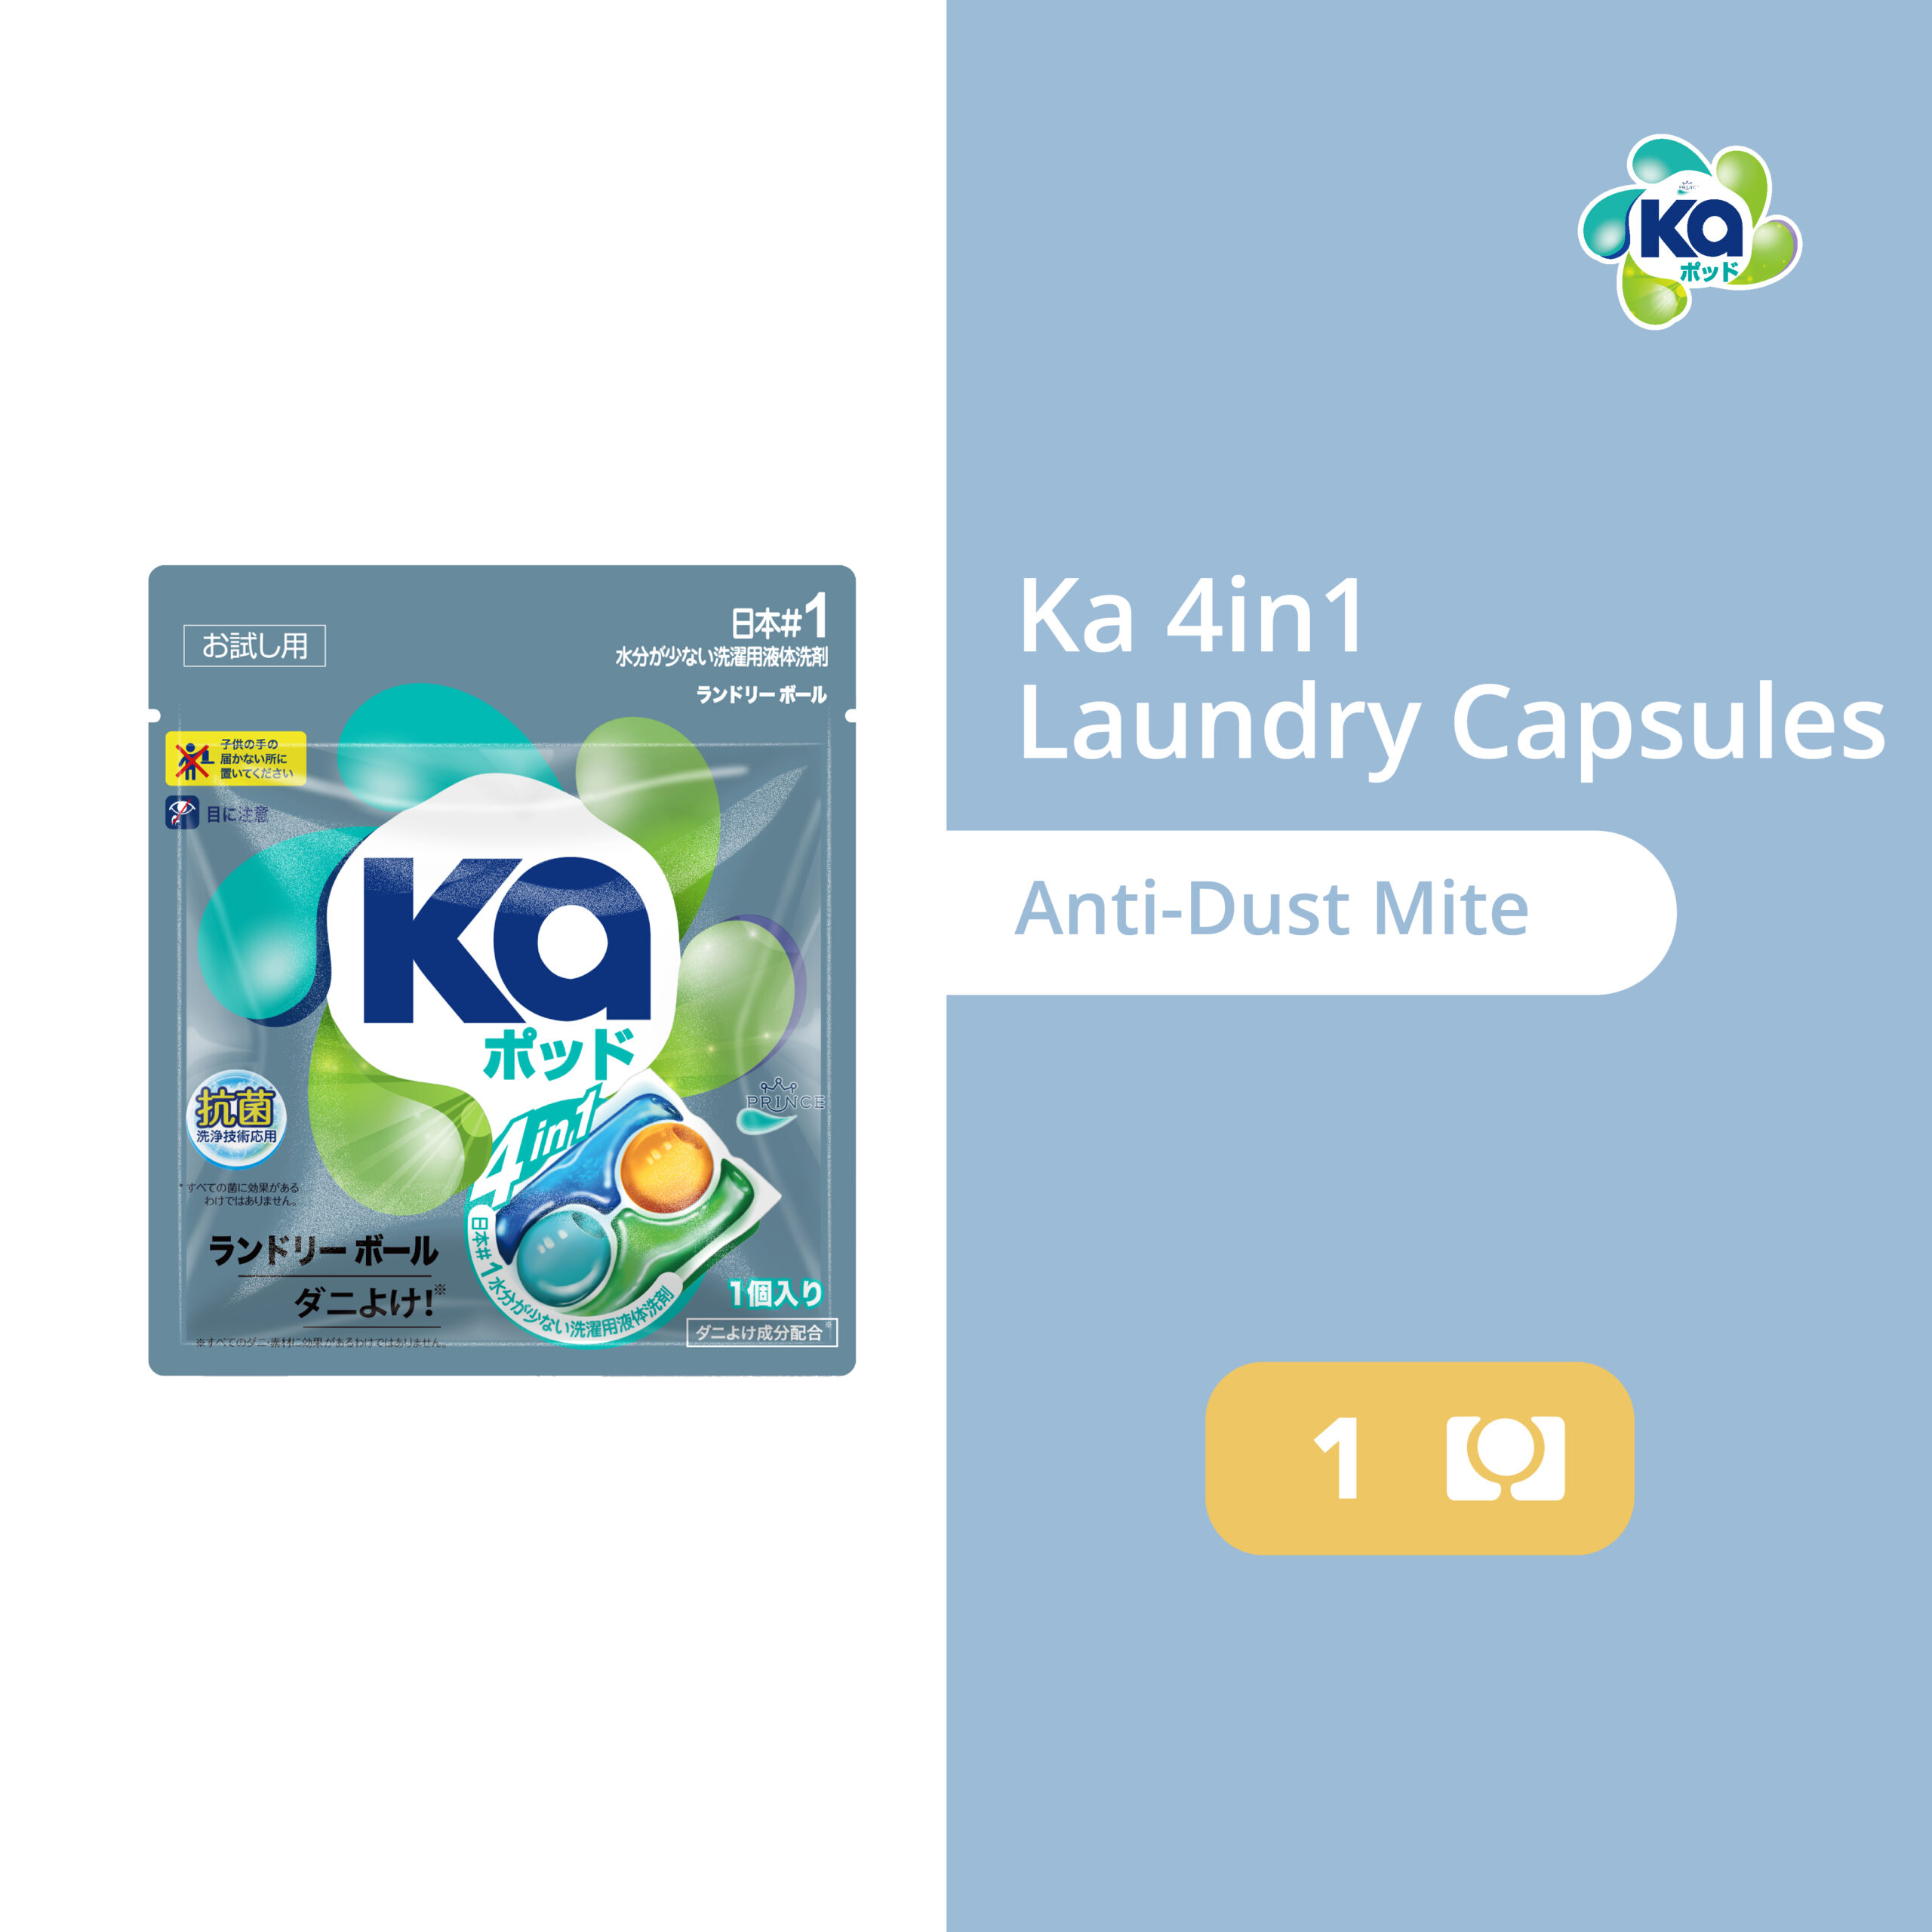 Ka 4in1 Laundry Capsules 1pc – Anti-Dust Mite